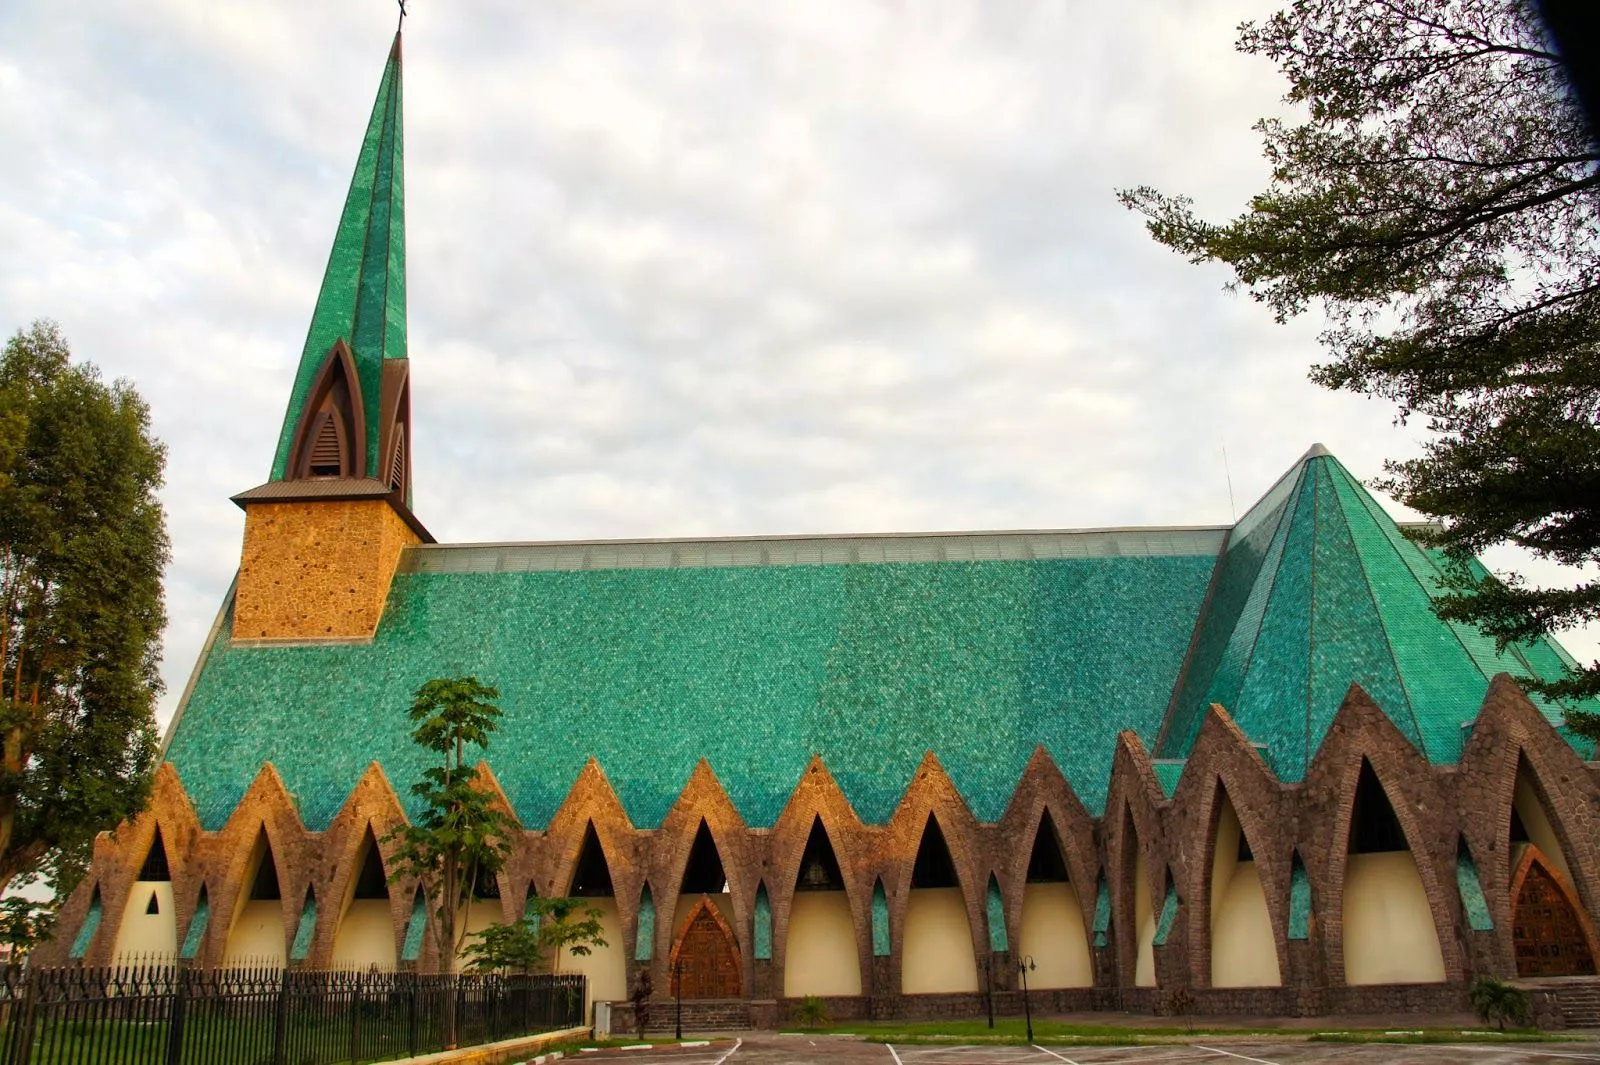 Basilique Sainte-Anne-du-Congo de Brazzaville in Republic of the Congo, Africa | Architecture - Rated 0.7